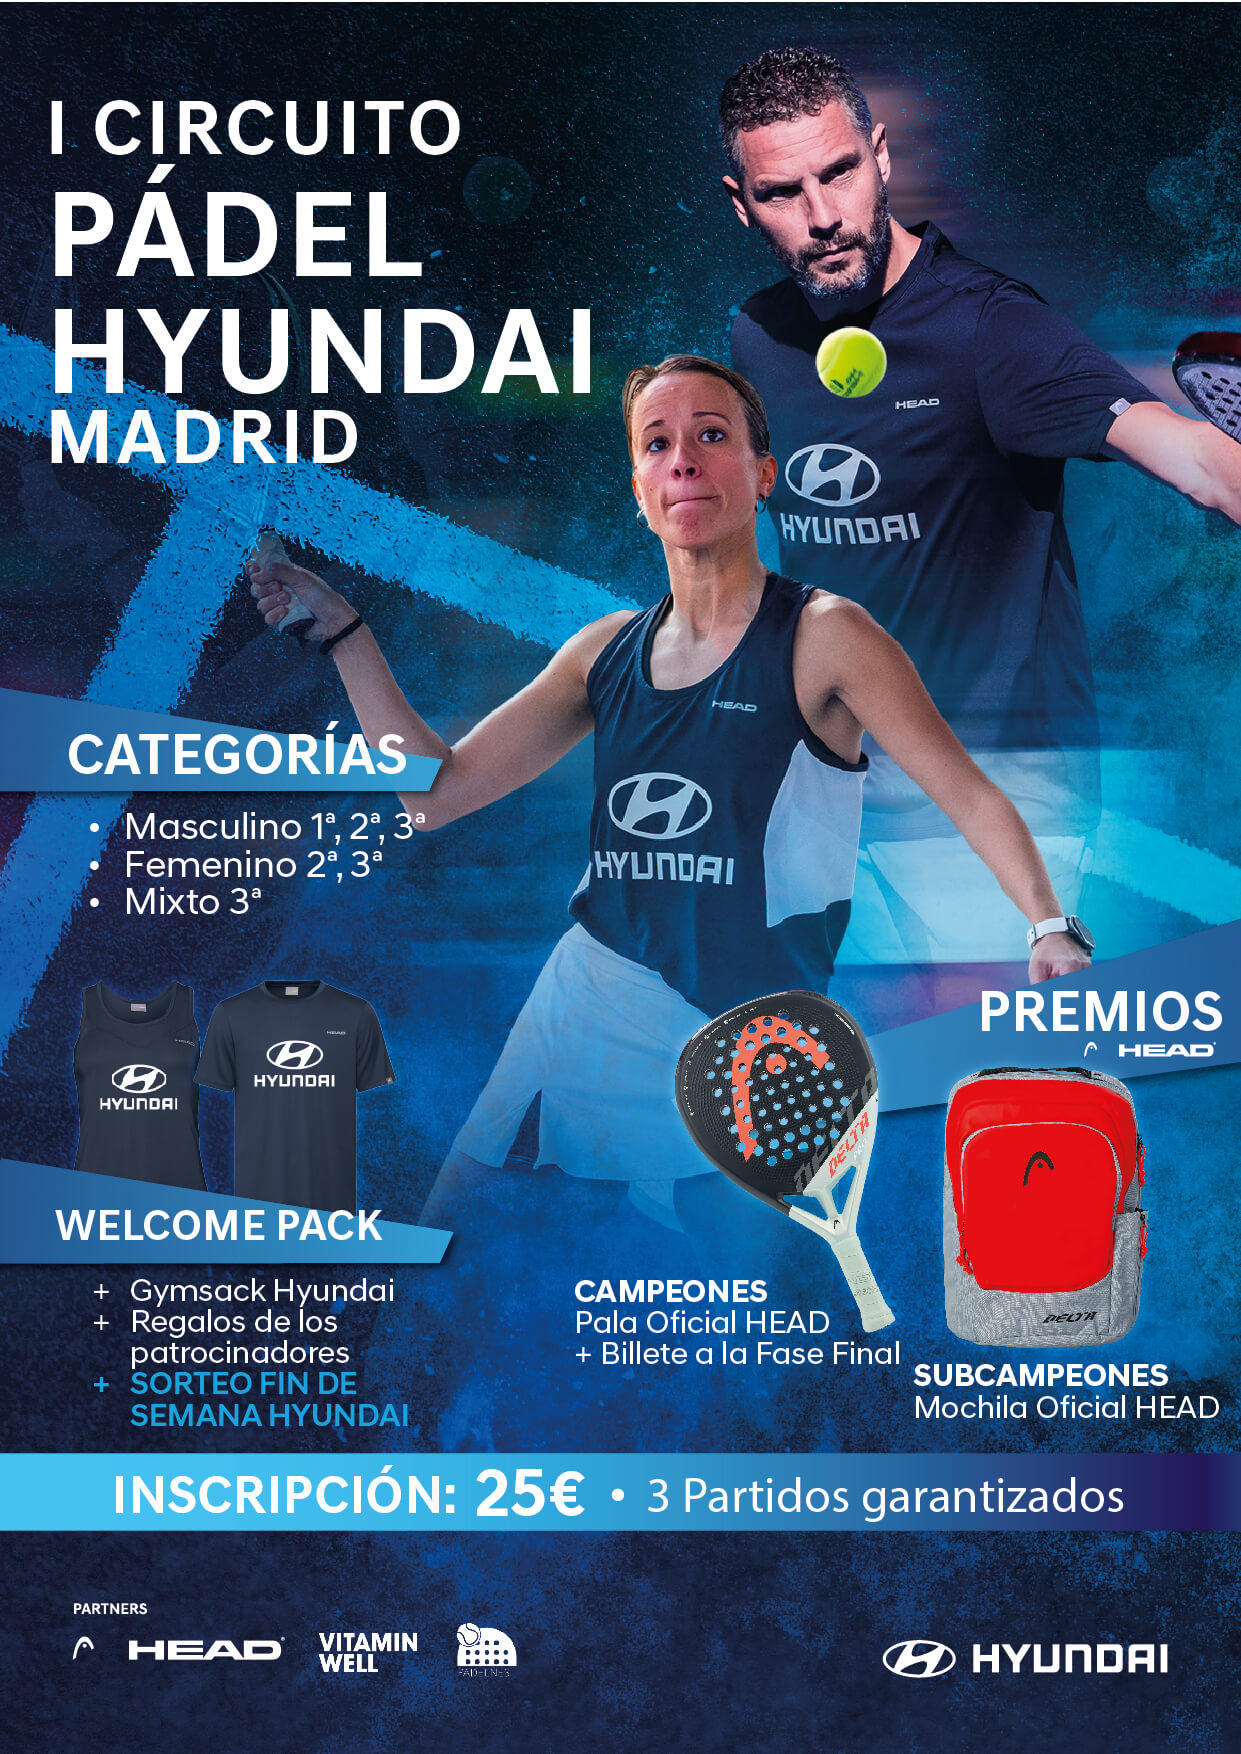 Circuito Pádel Hyundai - Madrid - I Circuito pádel